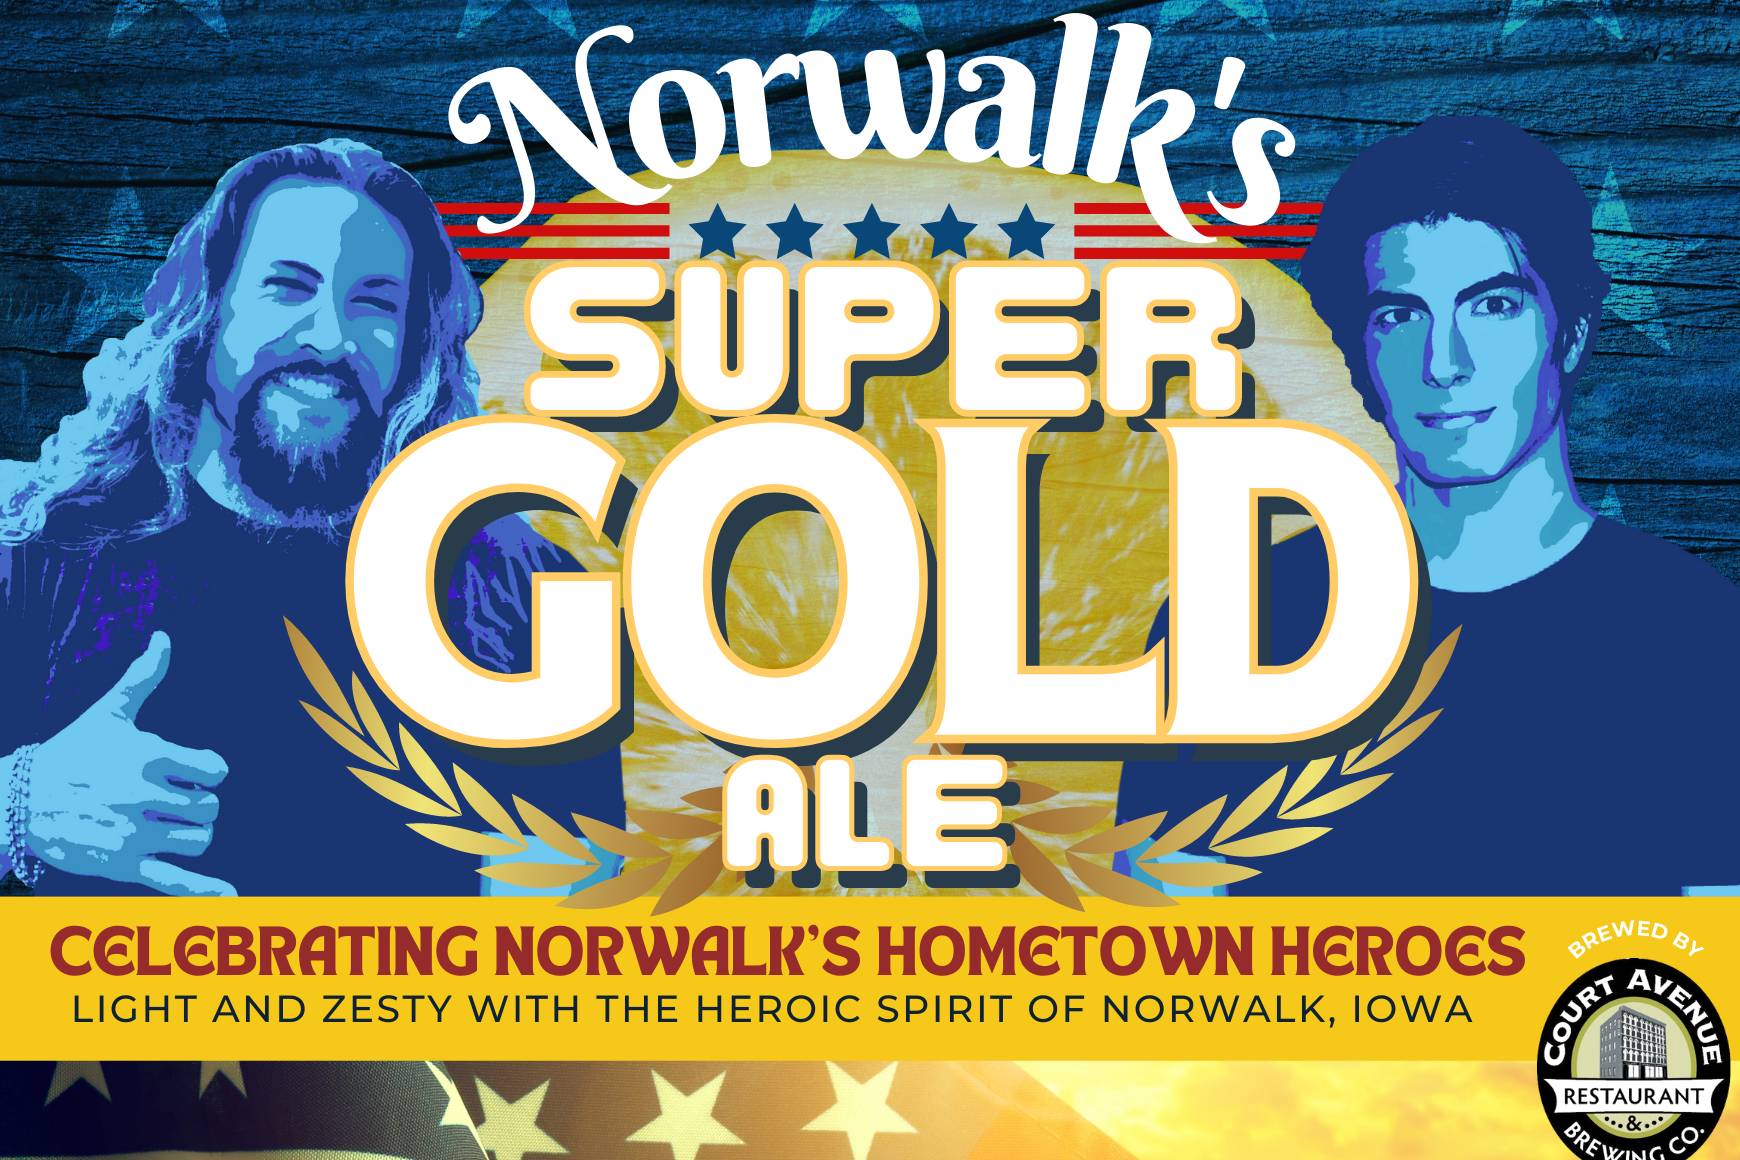 Norwalk Super Gold Ale2 - Copy